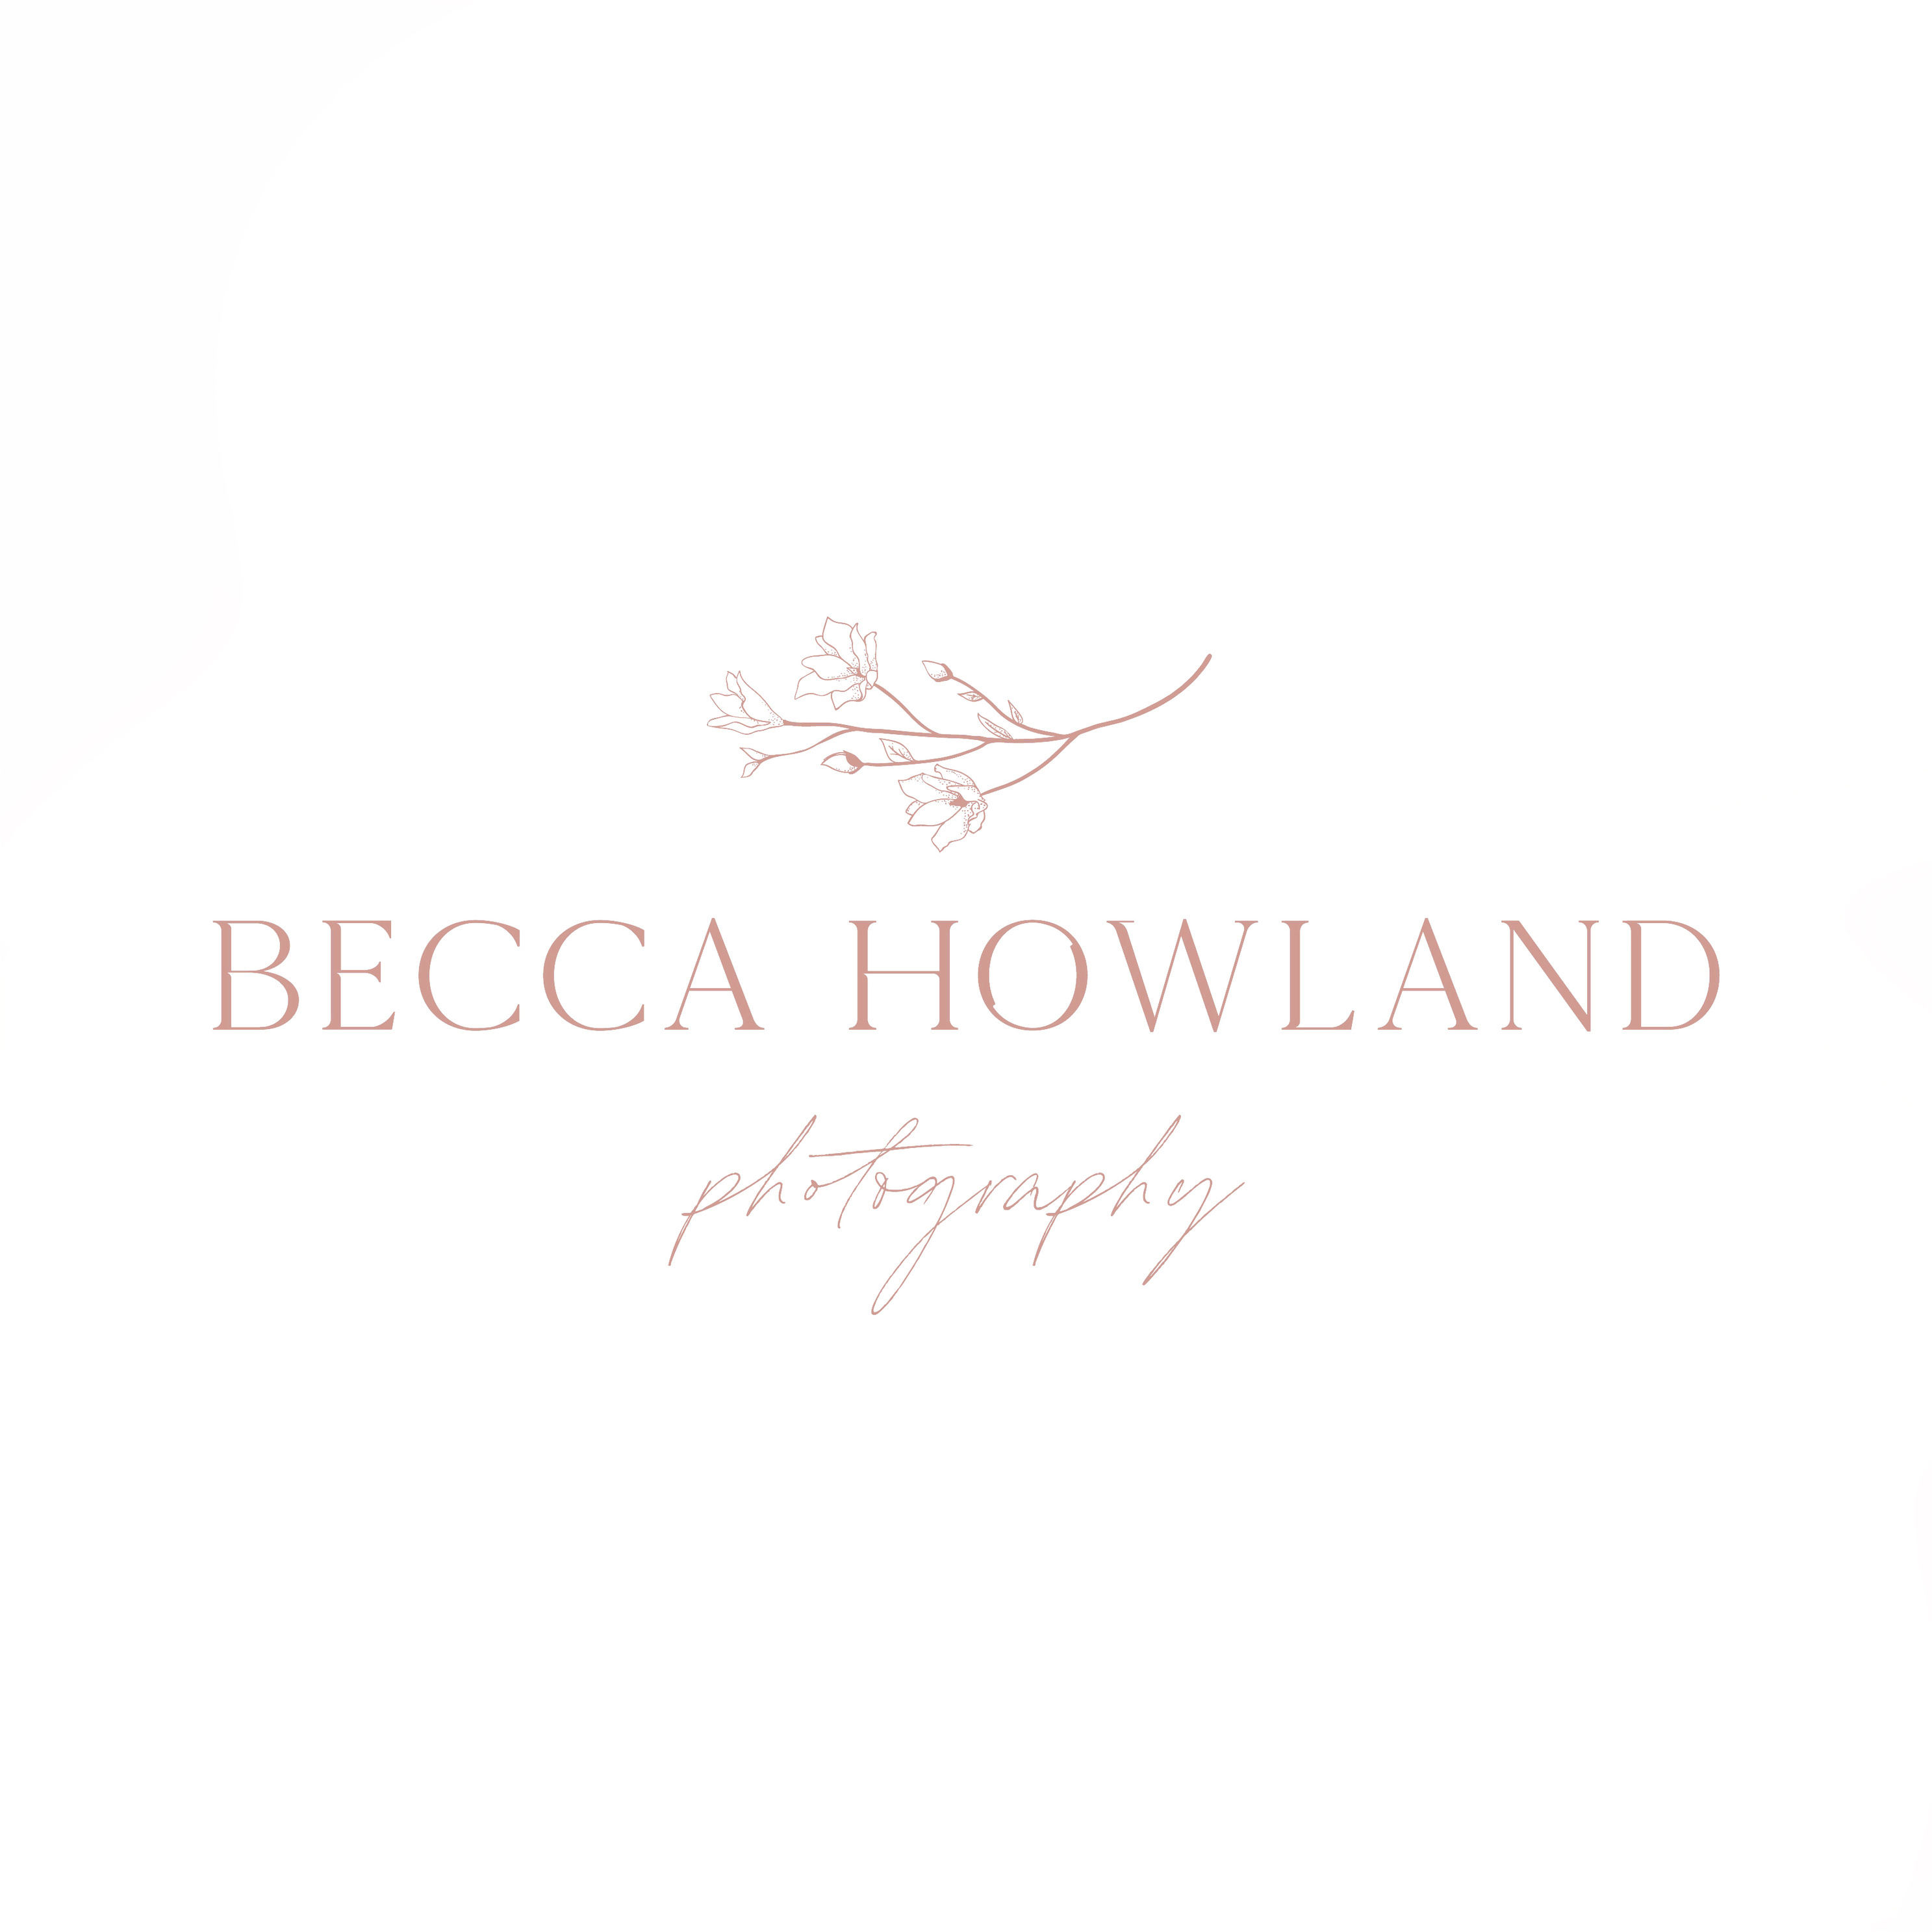 Becca Howland Photography